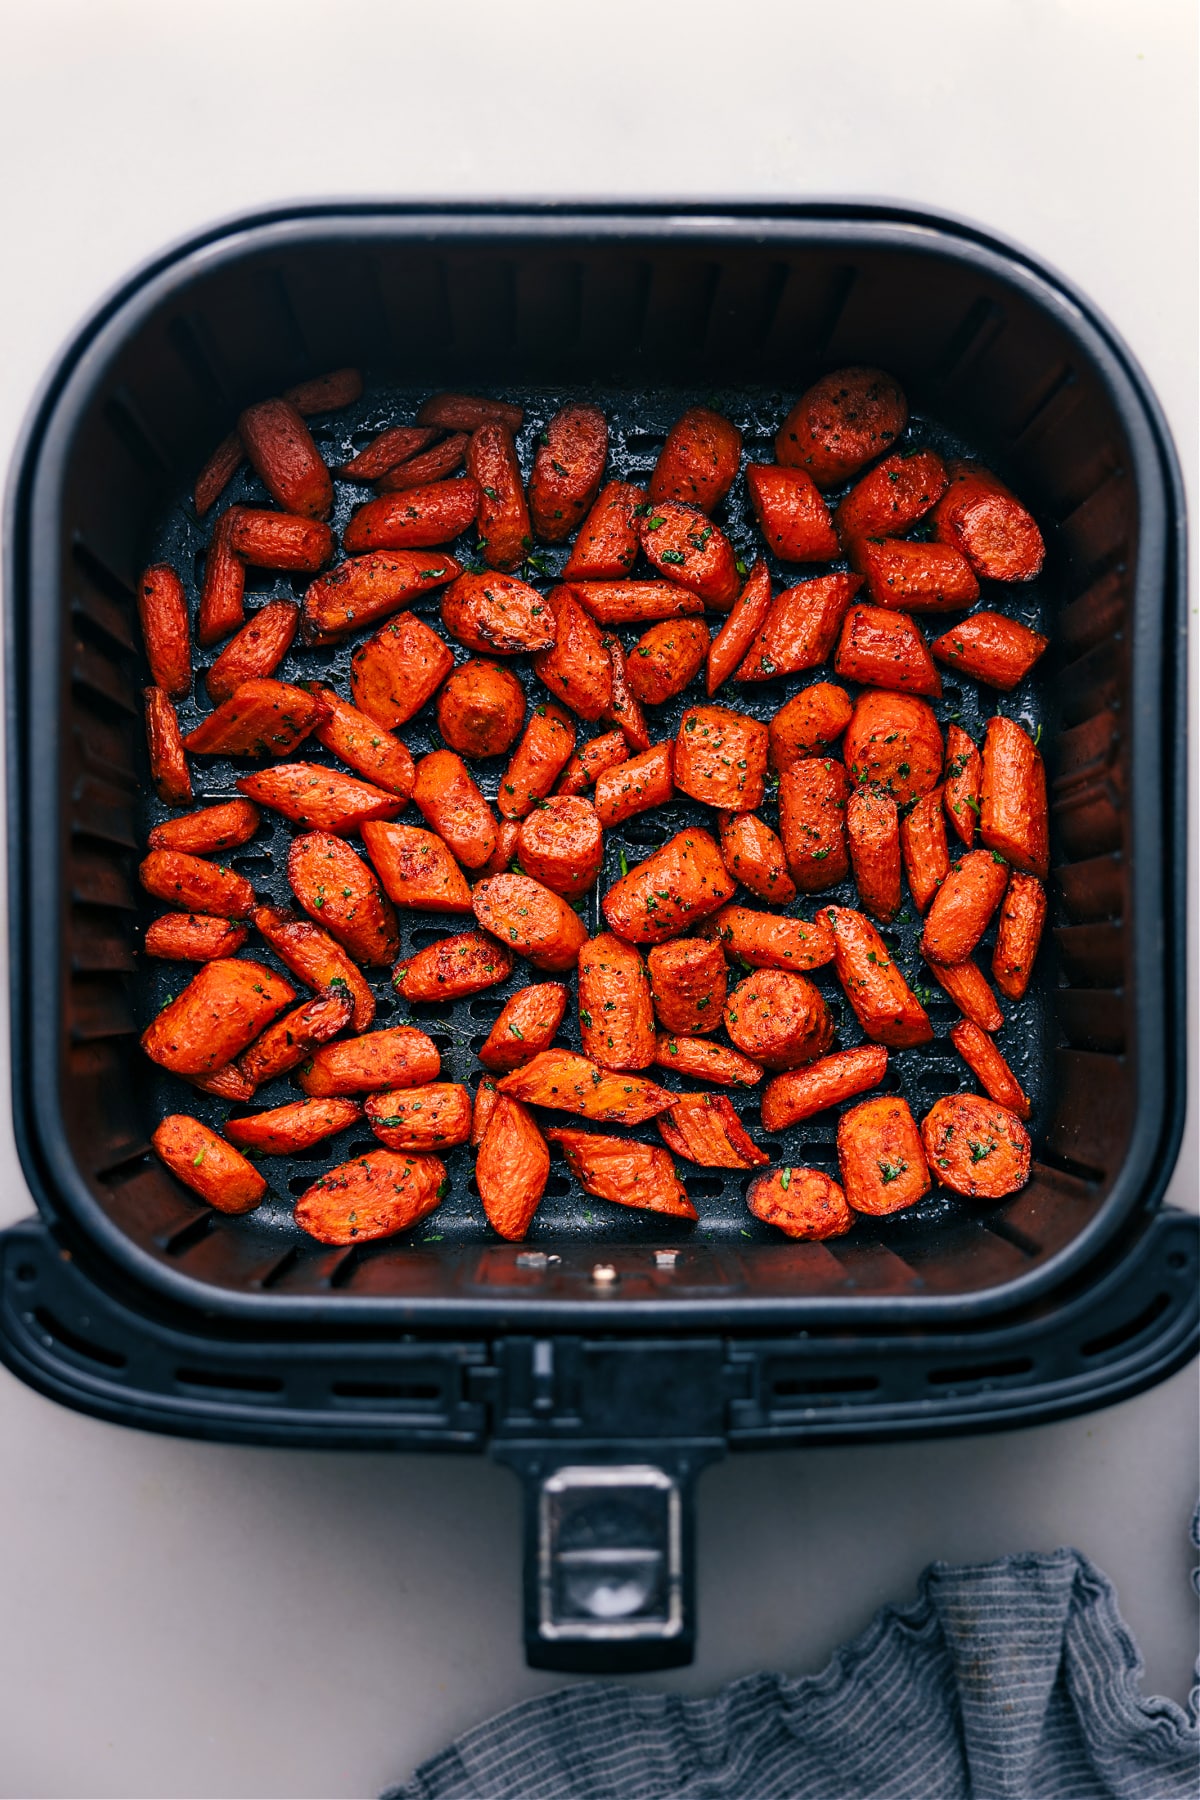 Heißluftfritteuse Karotten frisch aus der Heißluftfritteuse.